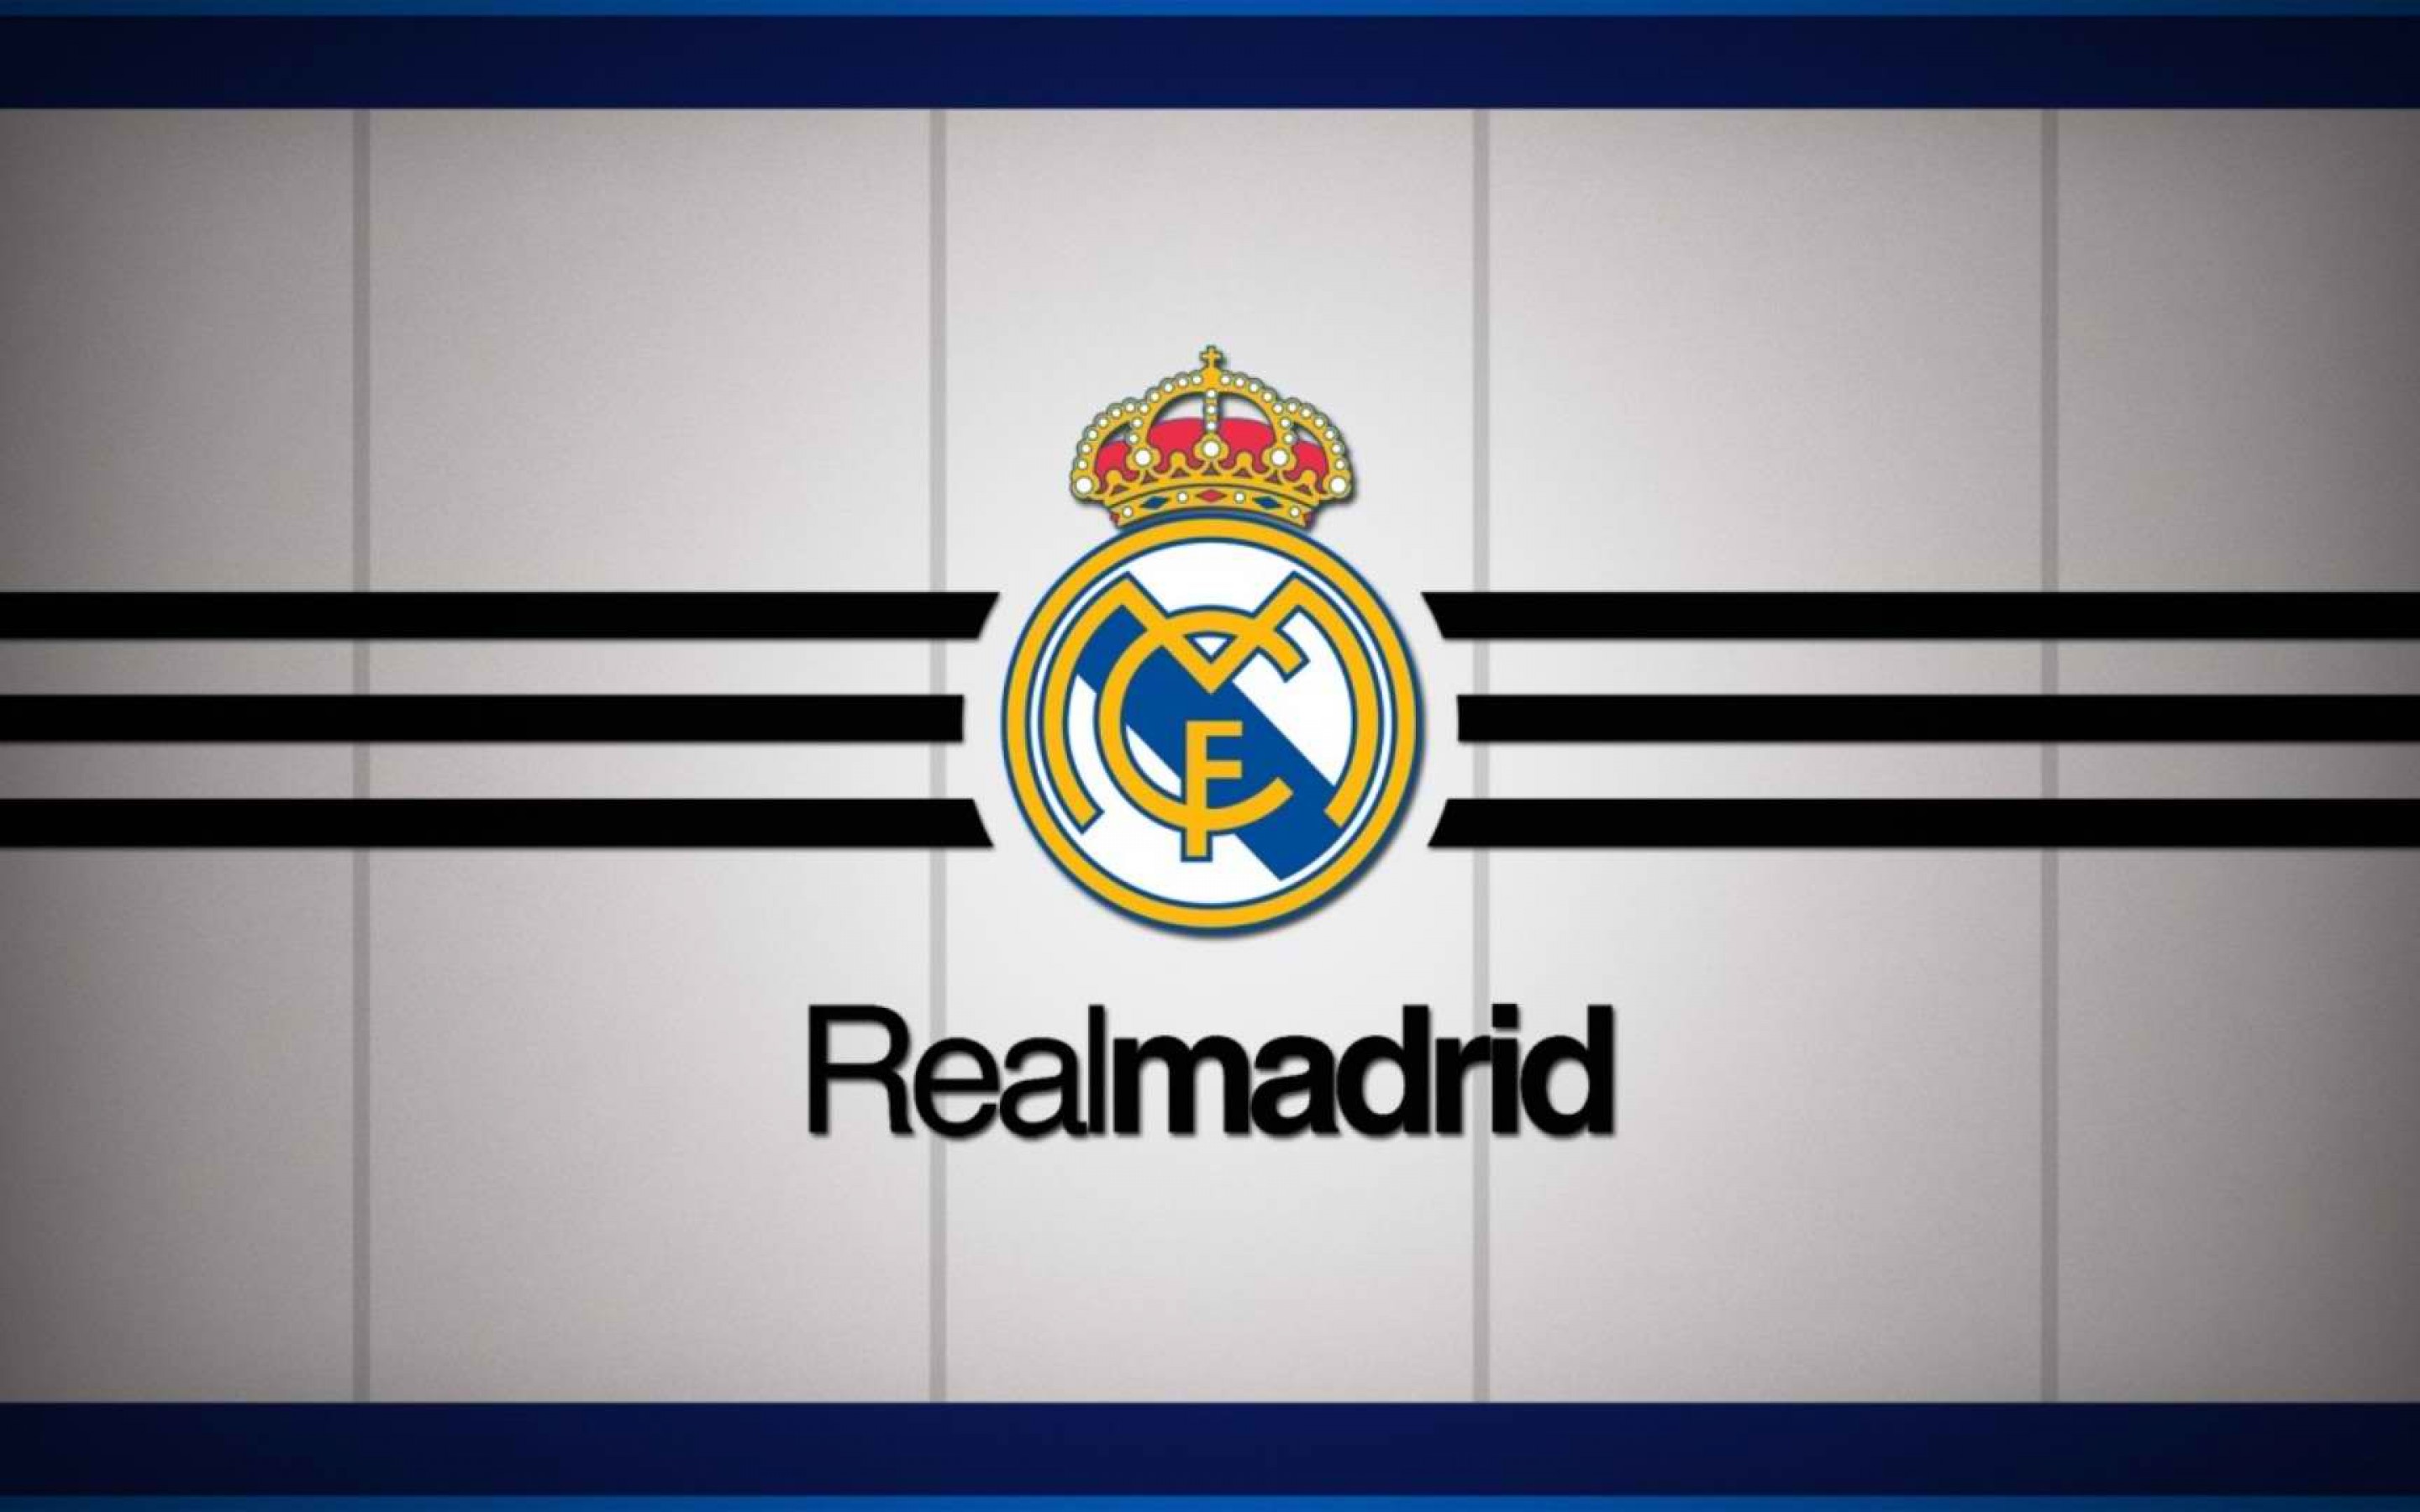 Download Real Madrid Logo High Resolution Full Hd Wallpaper For Desktop And Mobiles 15 Retina